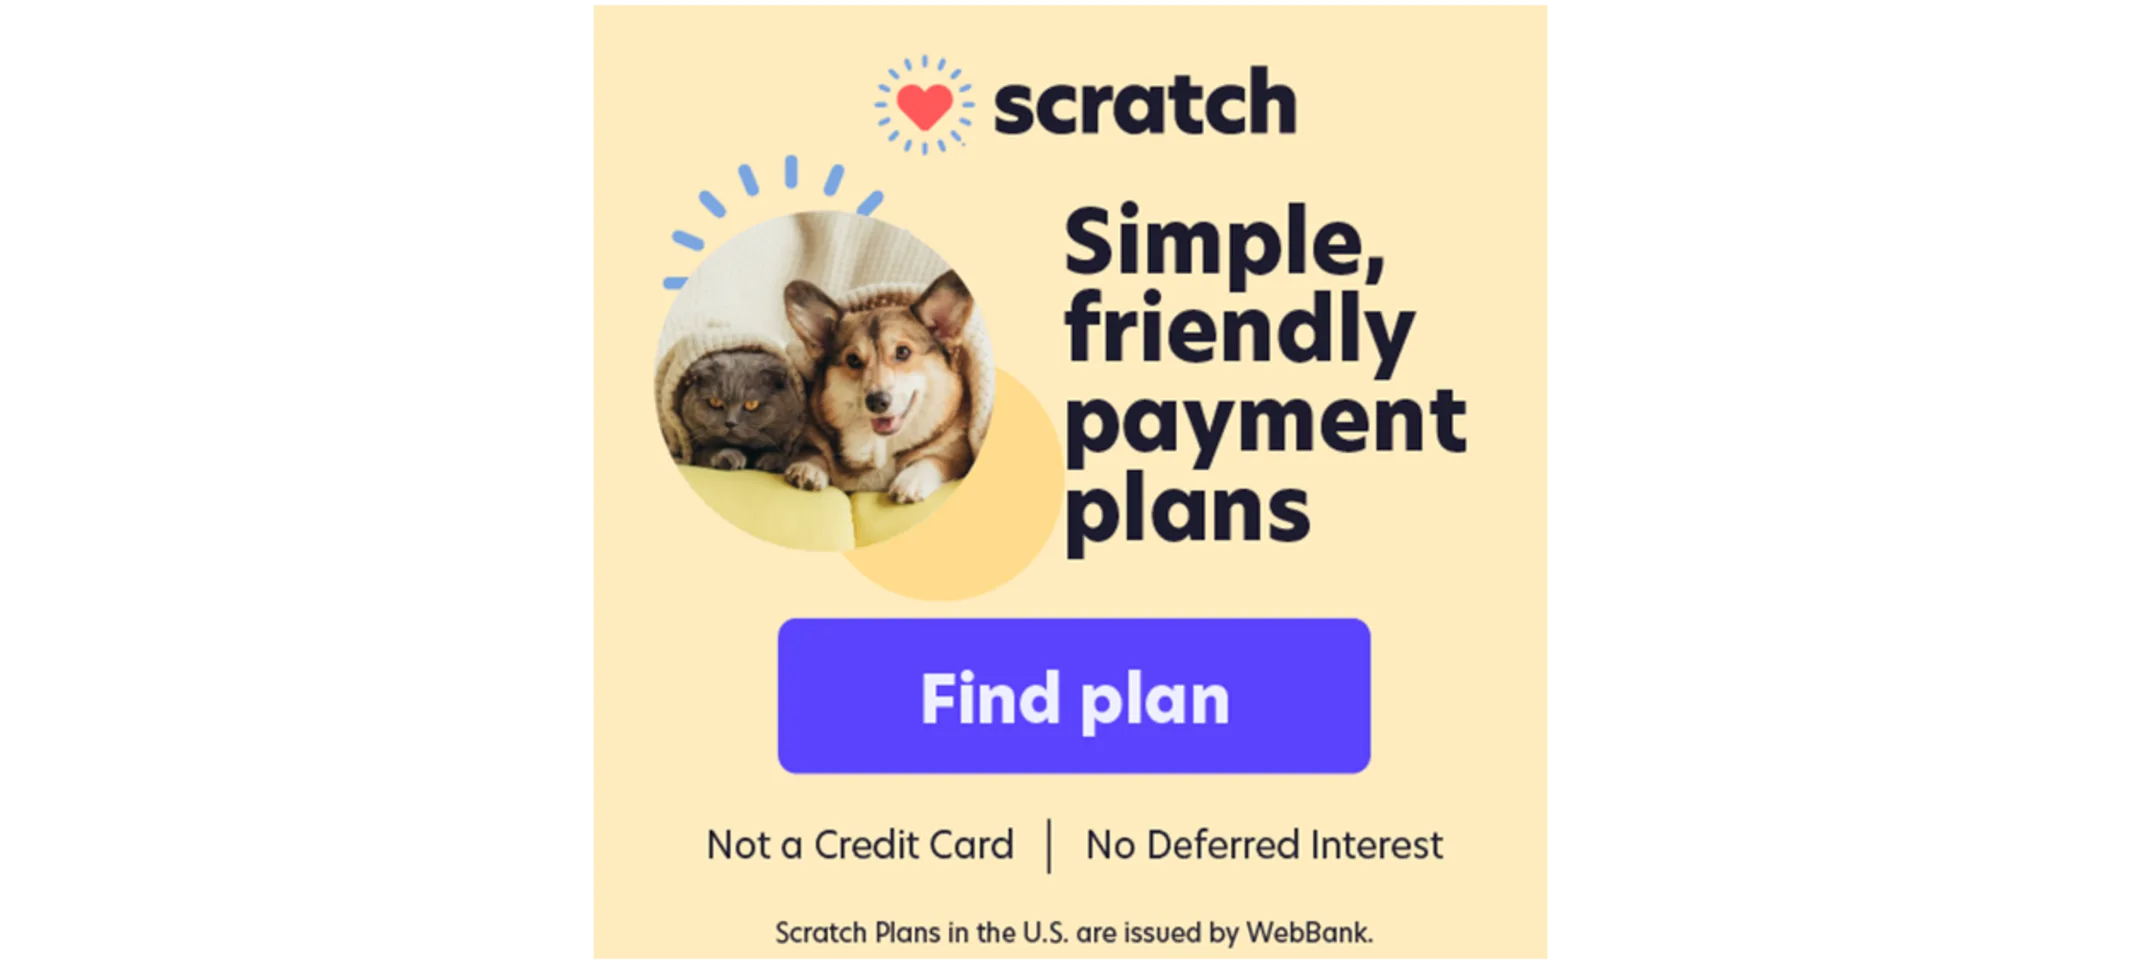 Scratchpay advertisement